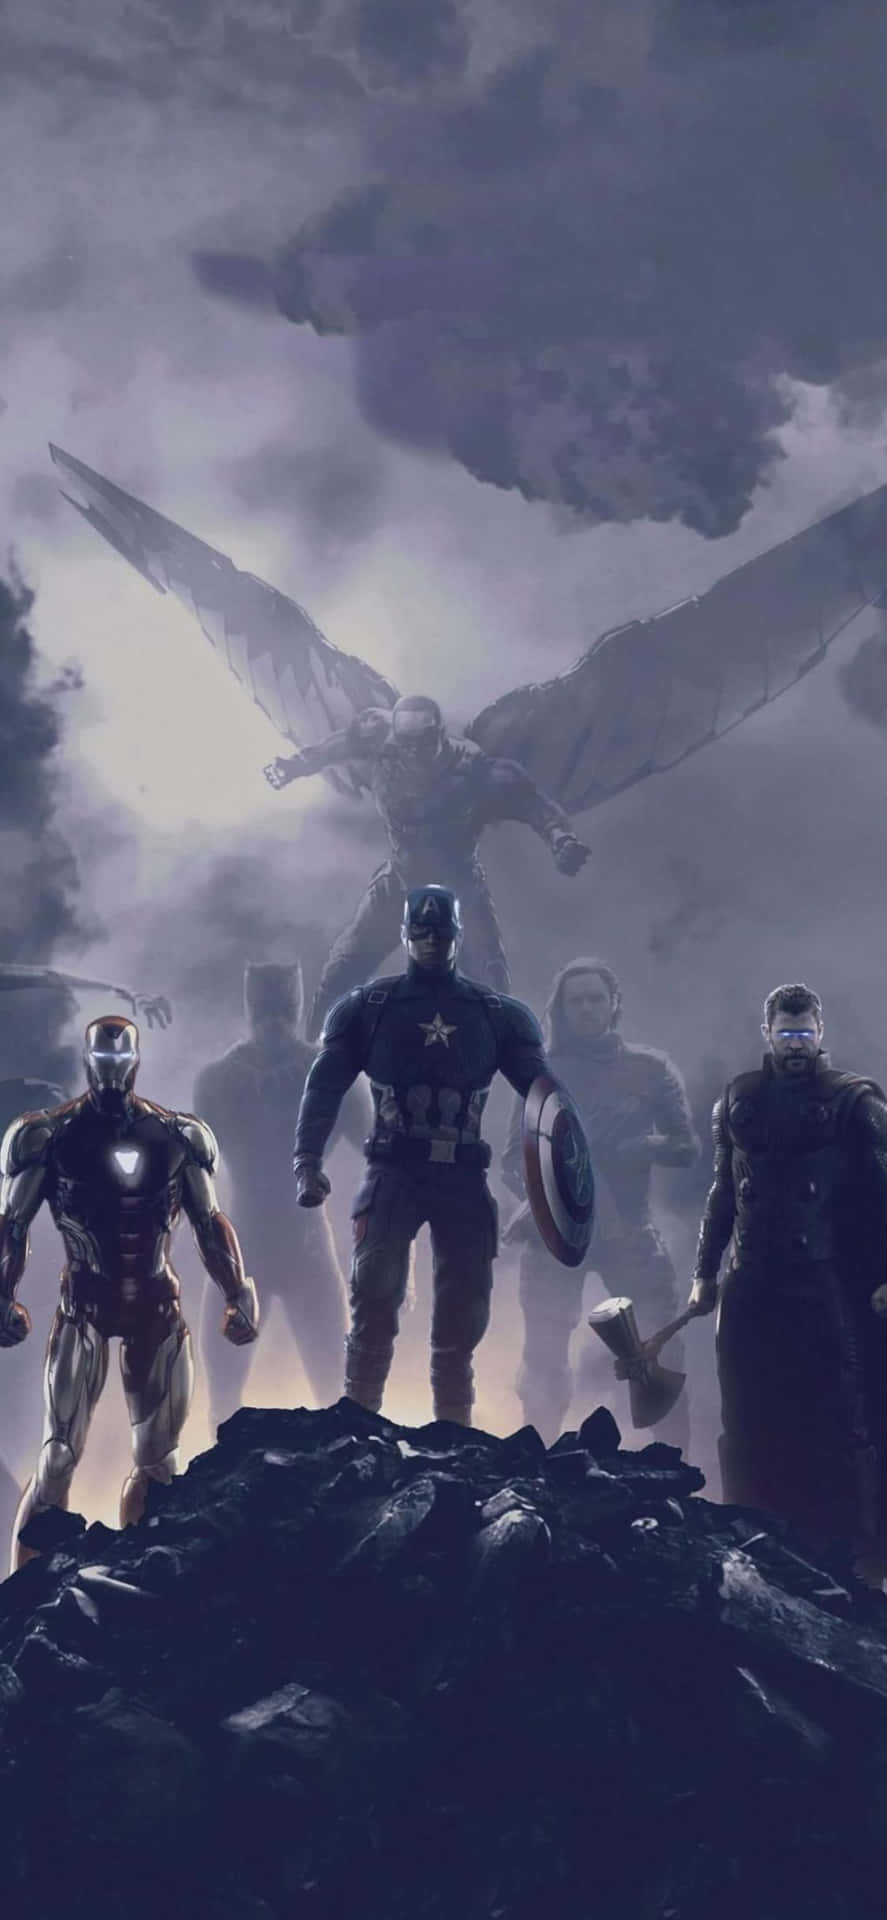 Fondode Pantalla De Avengers Endgame En Iphone Xs, Escena De La Película.